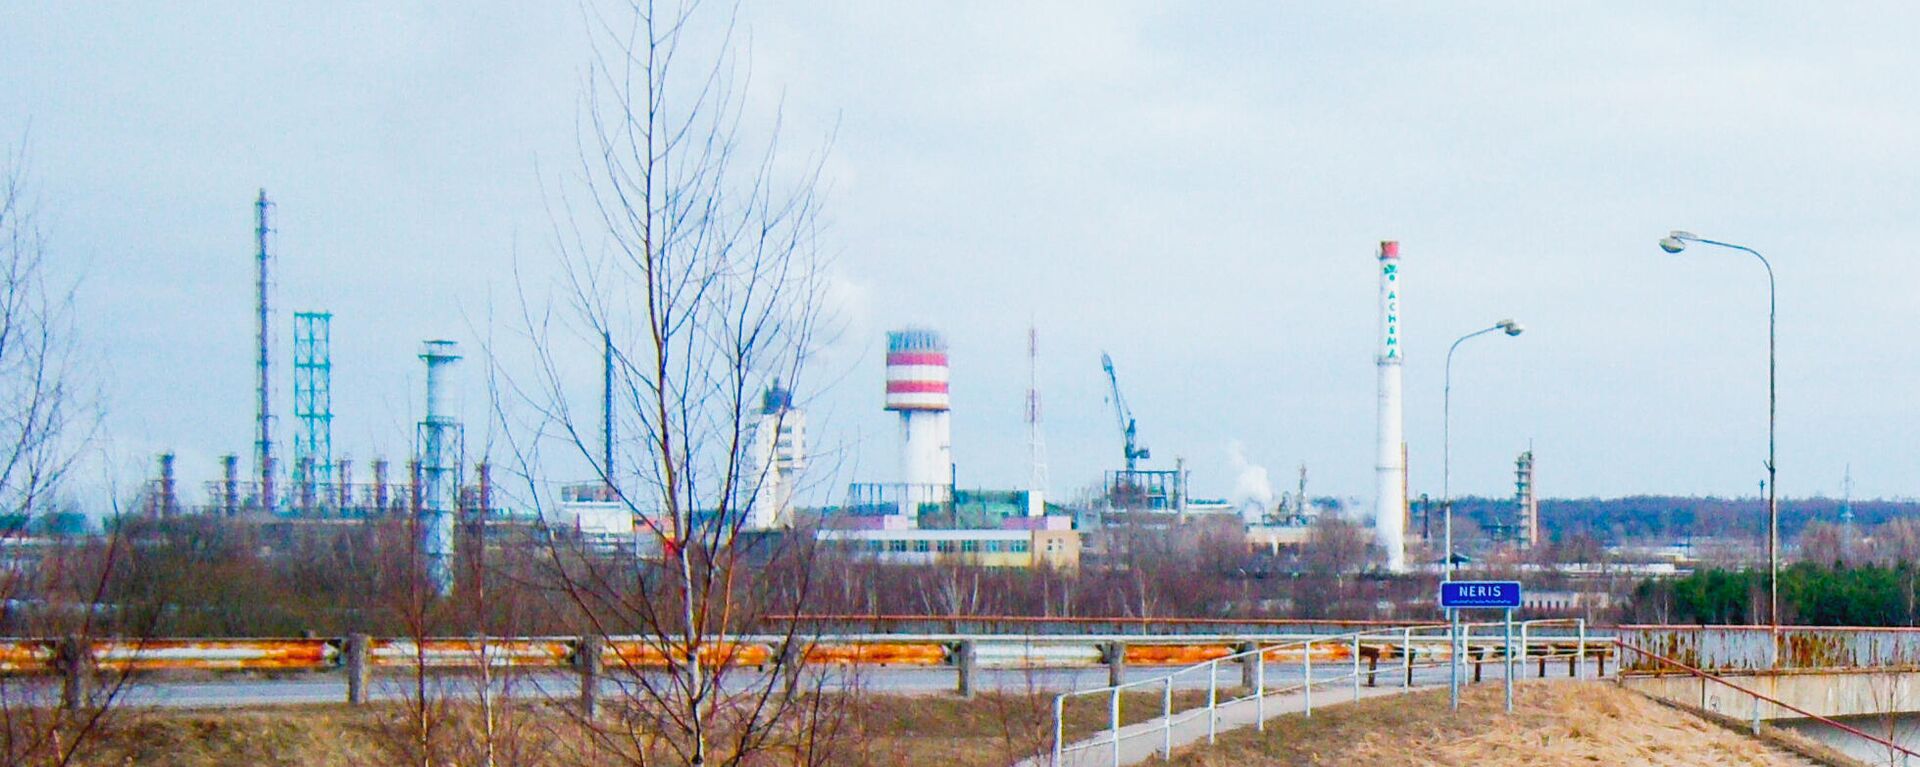 Химический завод компании Achema в городе Ионава, Литва  - Sputnik Латвия, 1920, 02.02.2022